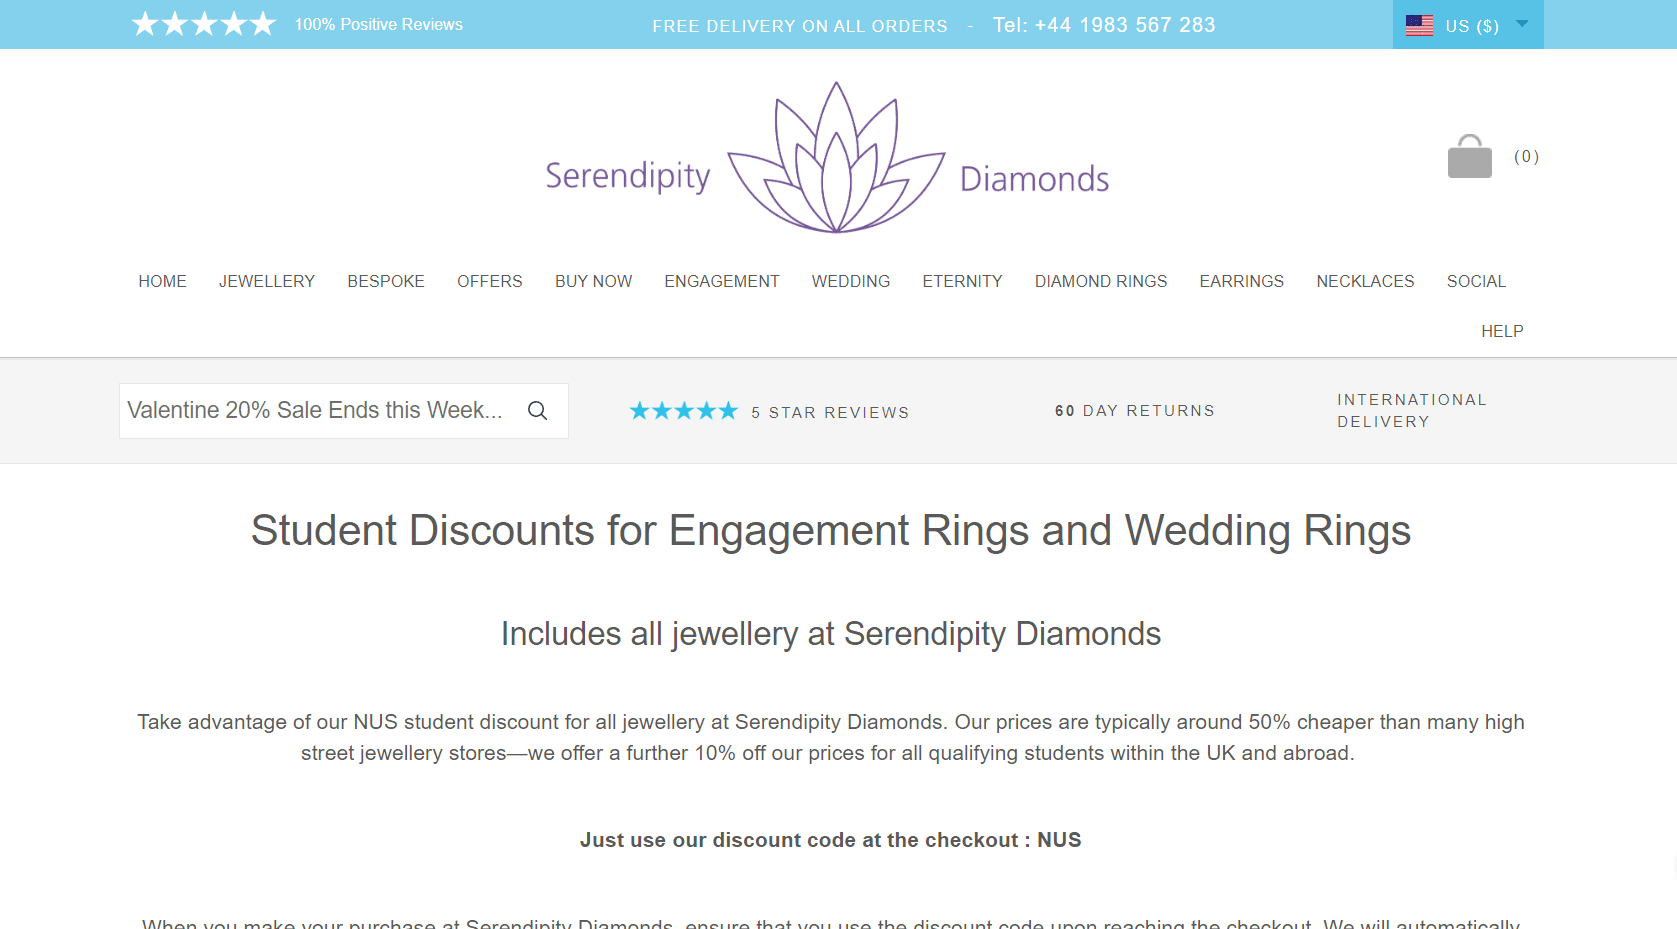 serendipity diamonds student discounts